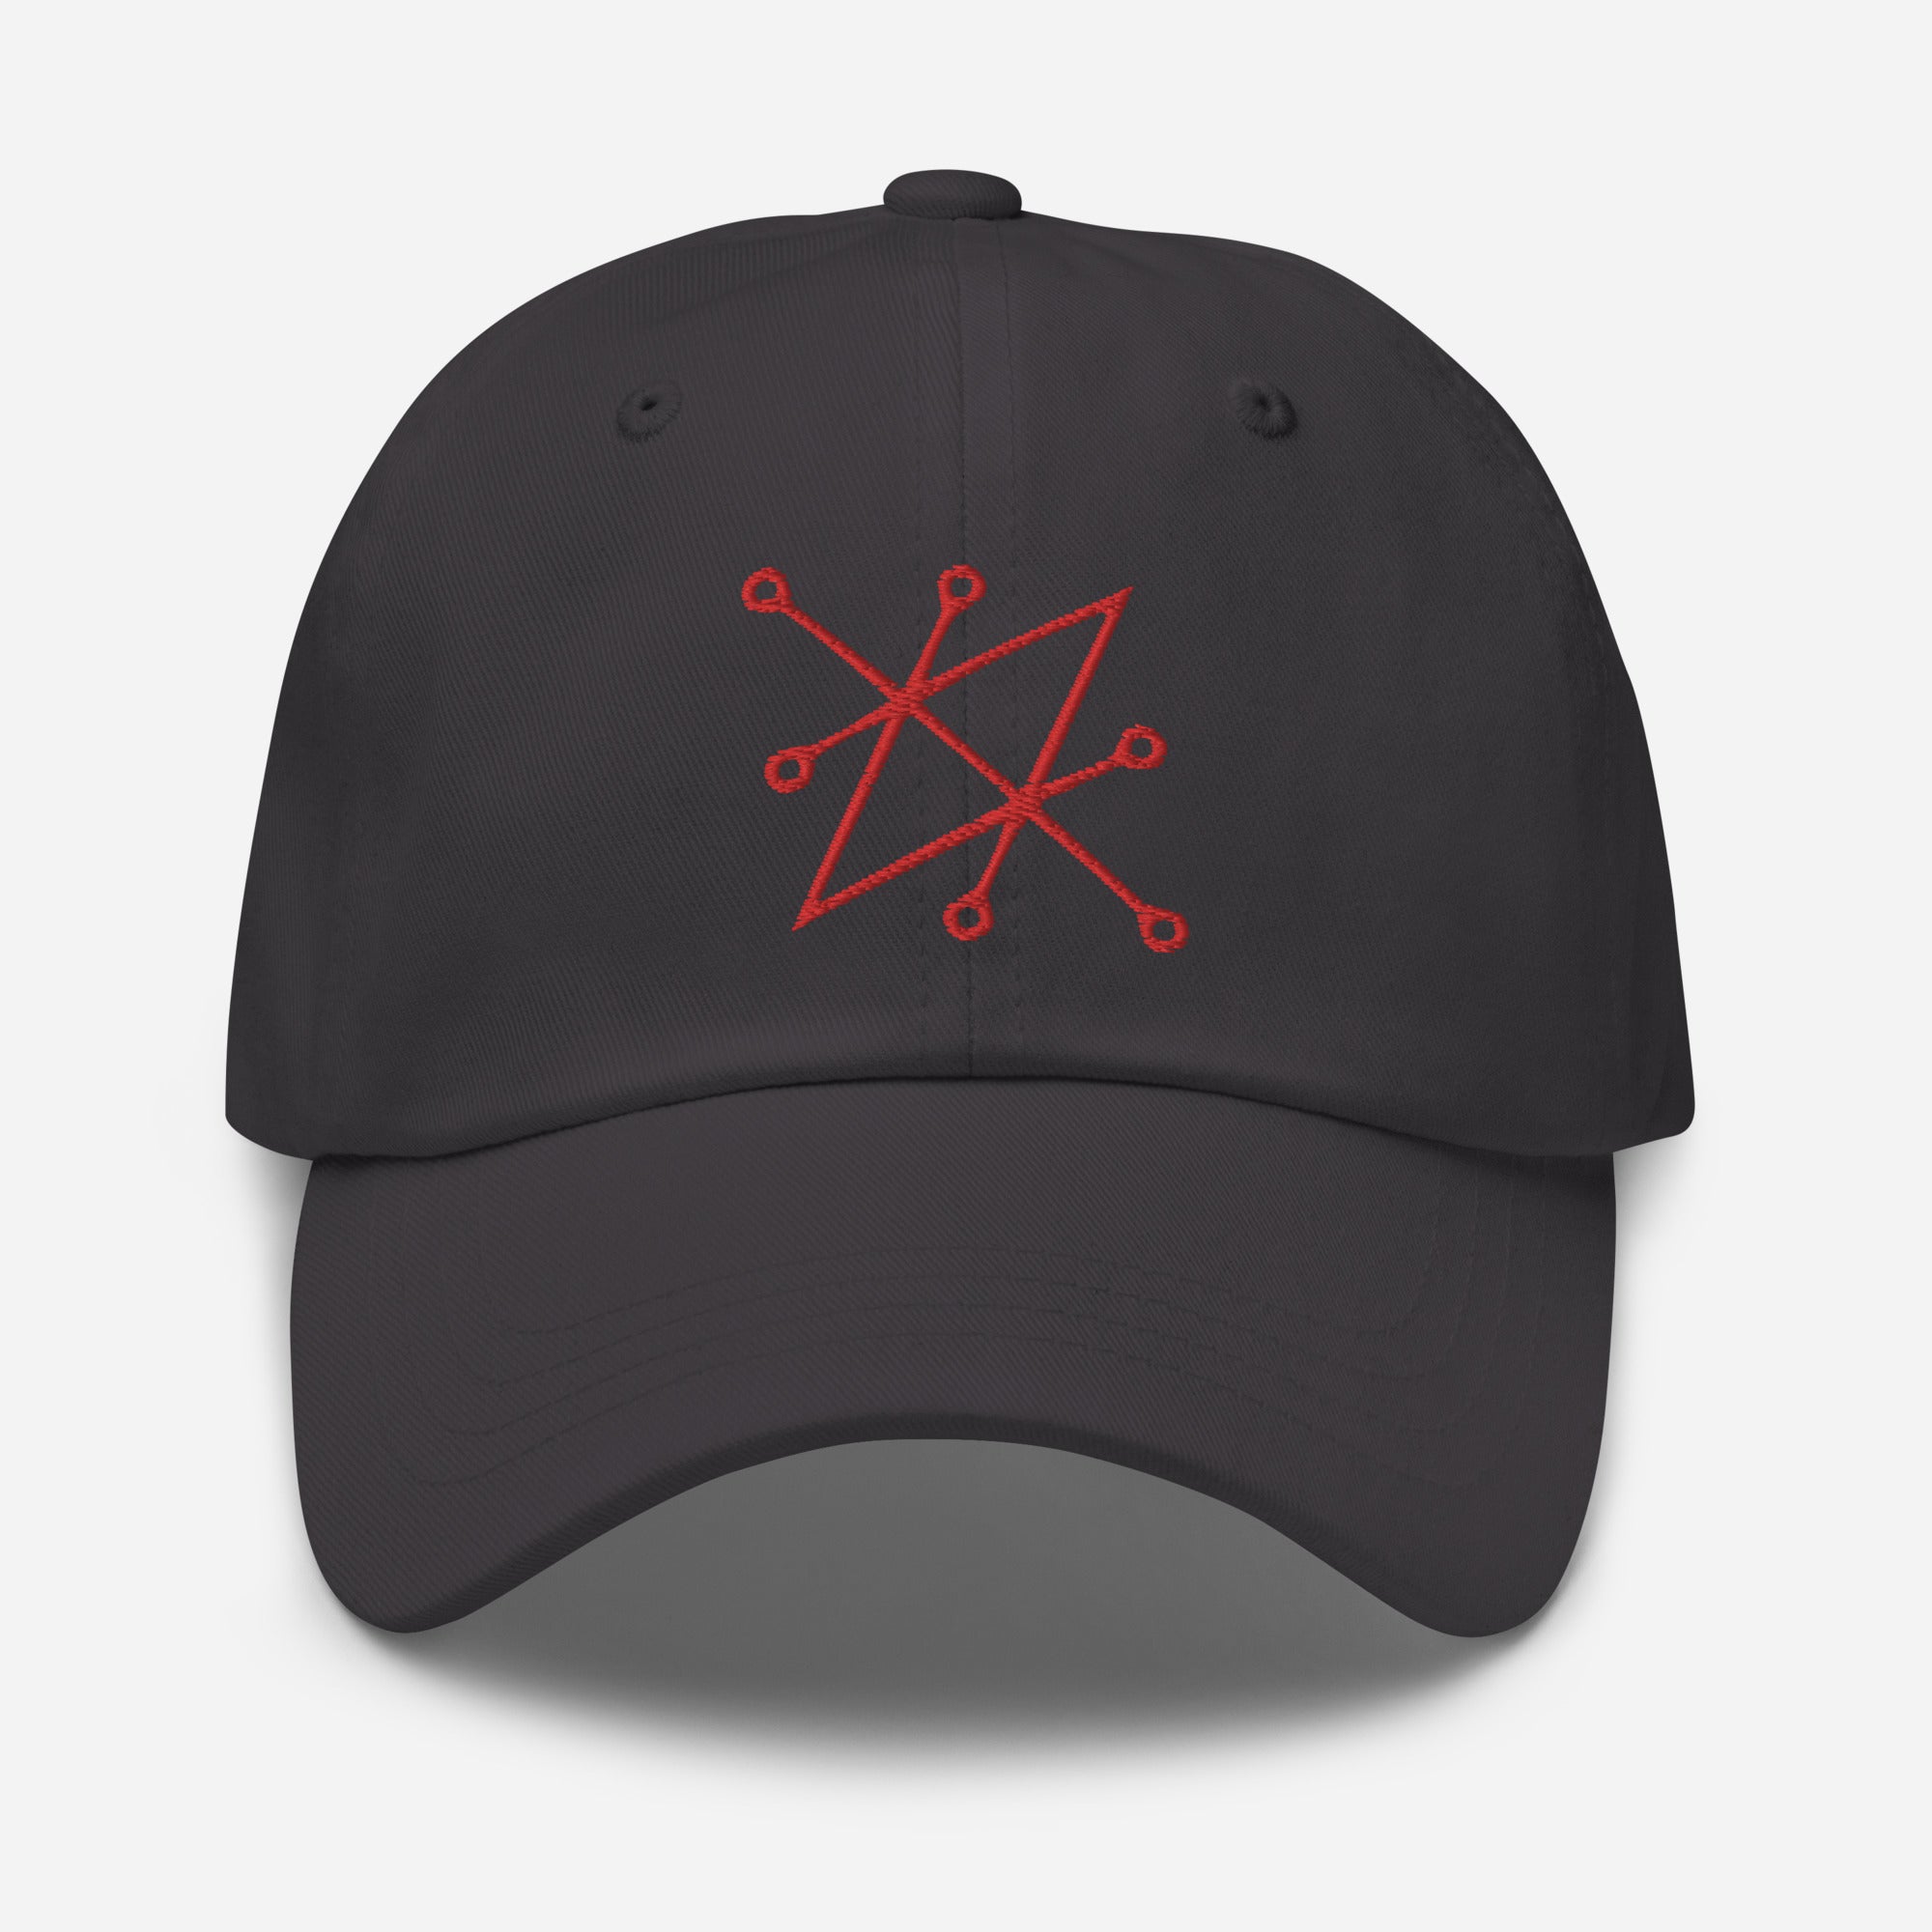 Red Sigil of Fallen Angel Azazel Occult Symbol Embroidered Baseball Cap Dad hat